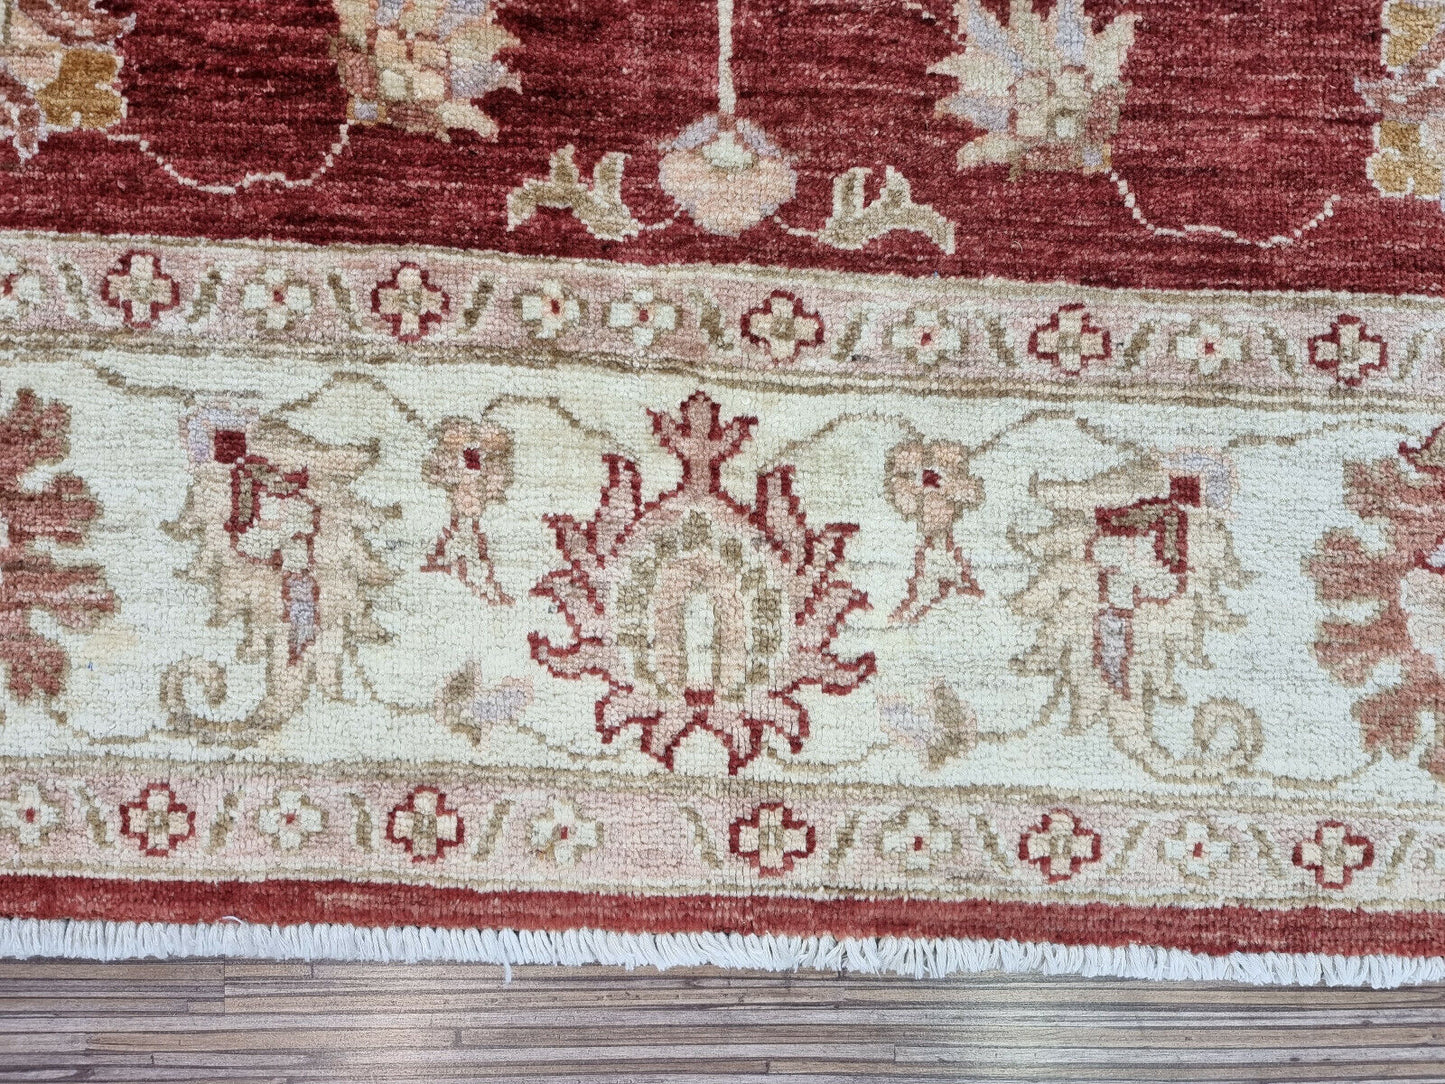 Close-up of geometric motifs on Handmade Vintage Afghan Zigler Rug - Detailed view highlighting the geometric motifs integrated into the rug's design.